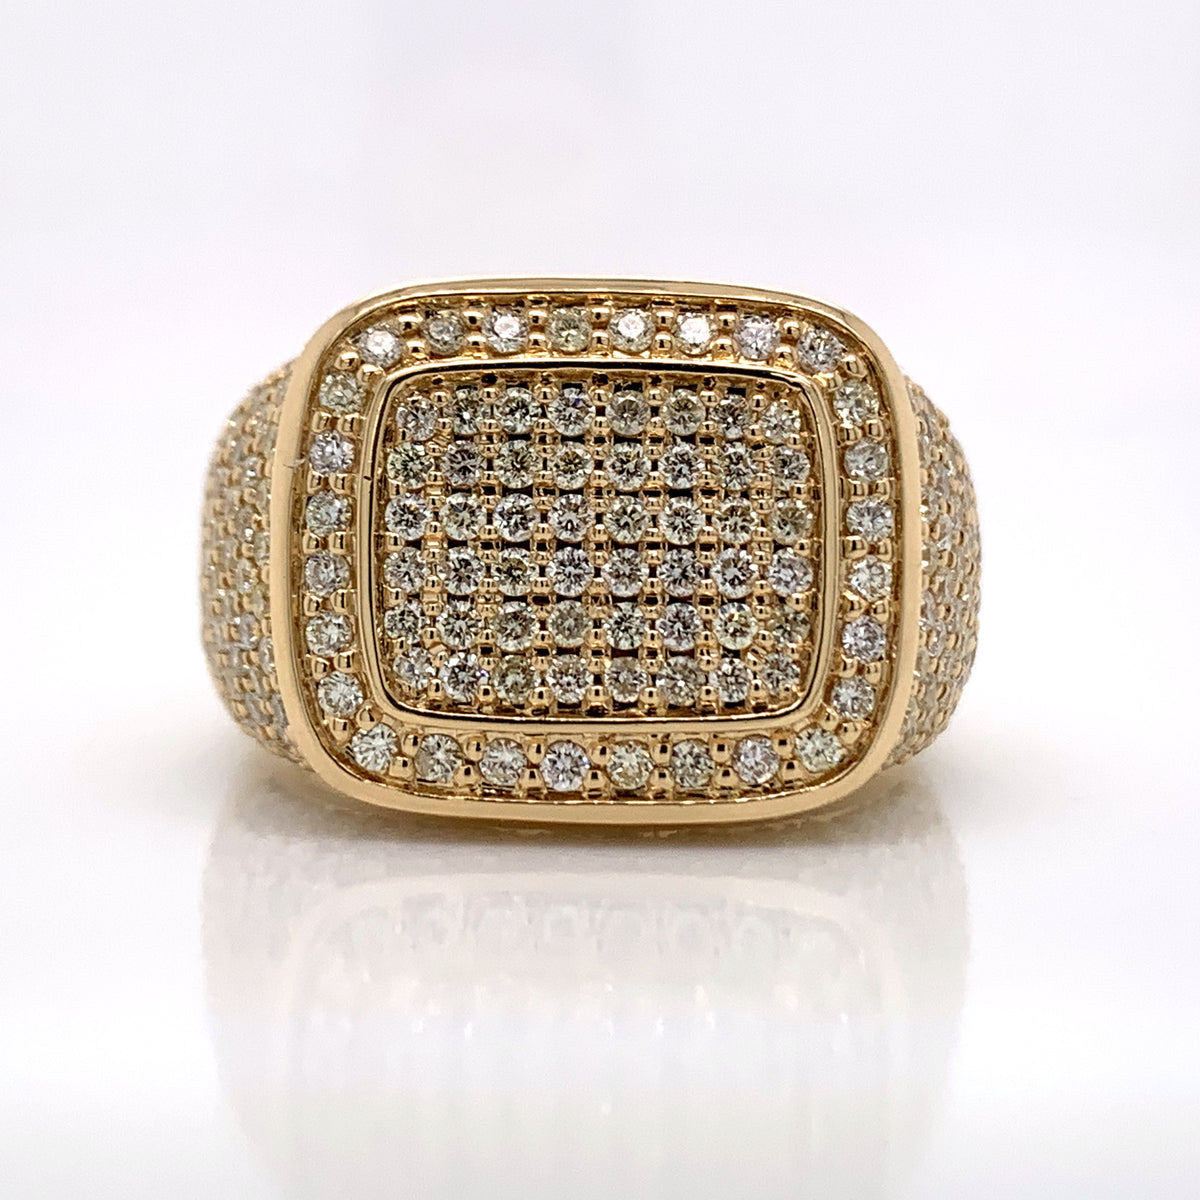 3.00 CT. Diamond Ring in 14K Gold - White Carat Diamonds 